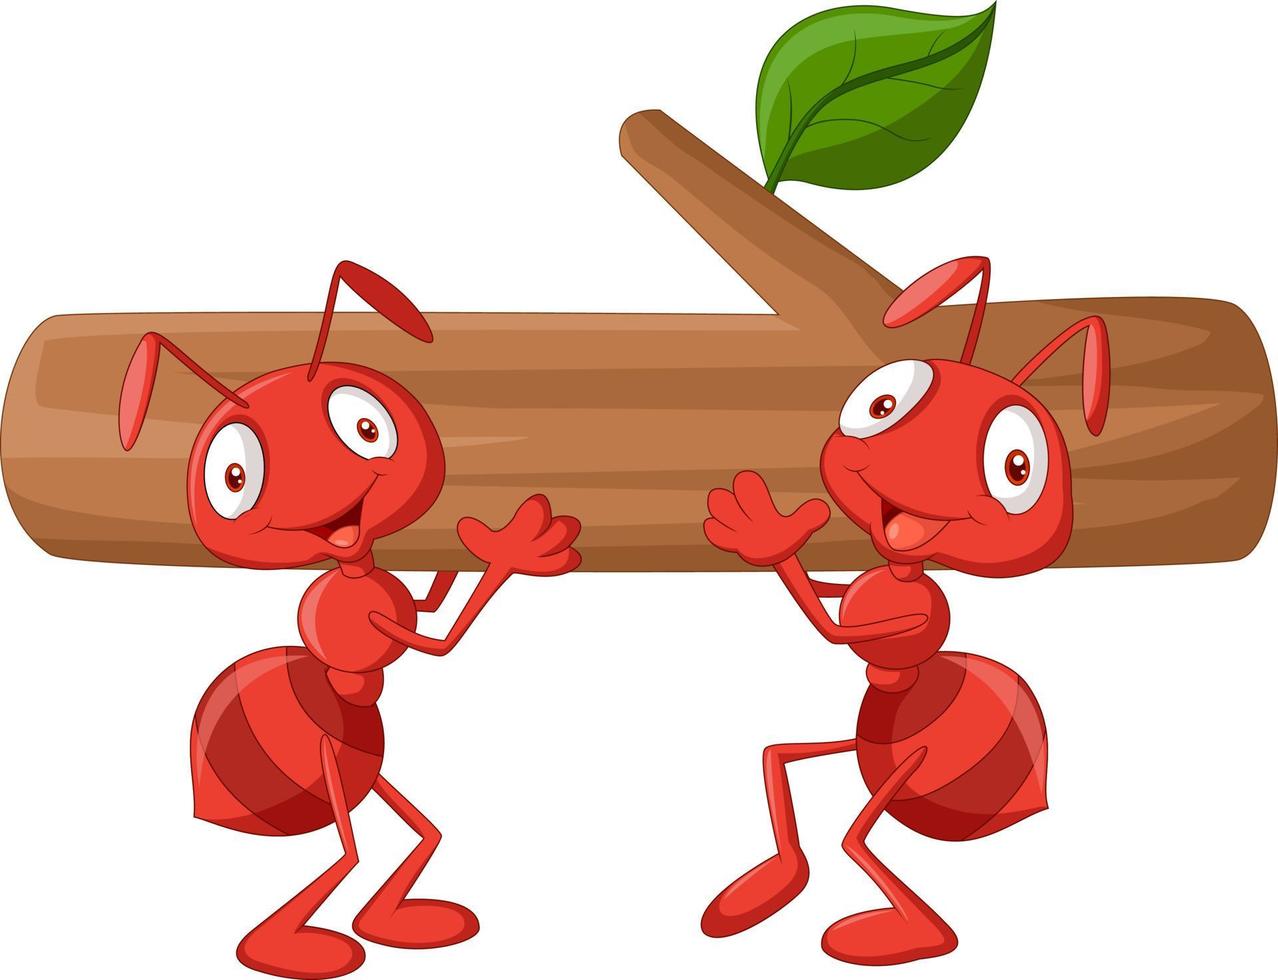 Team of ants carries log vector